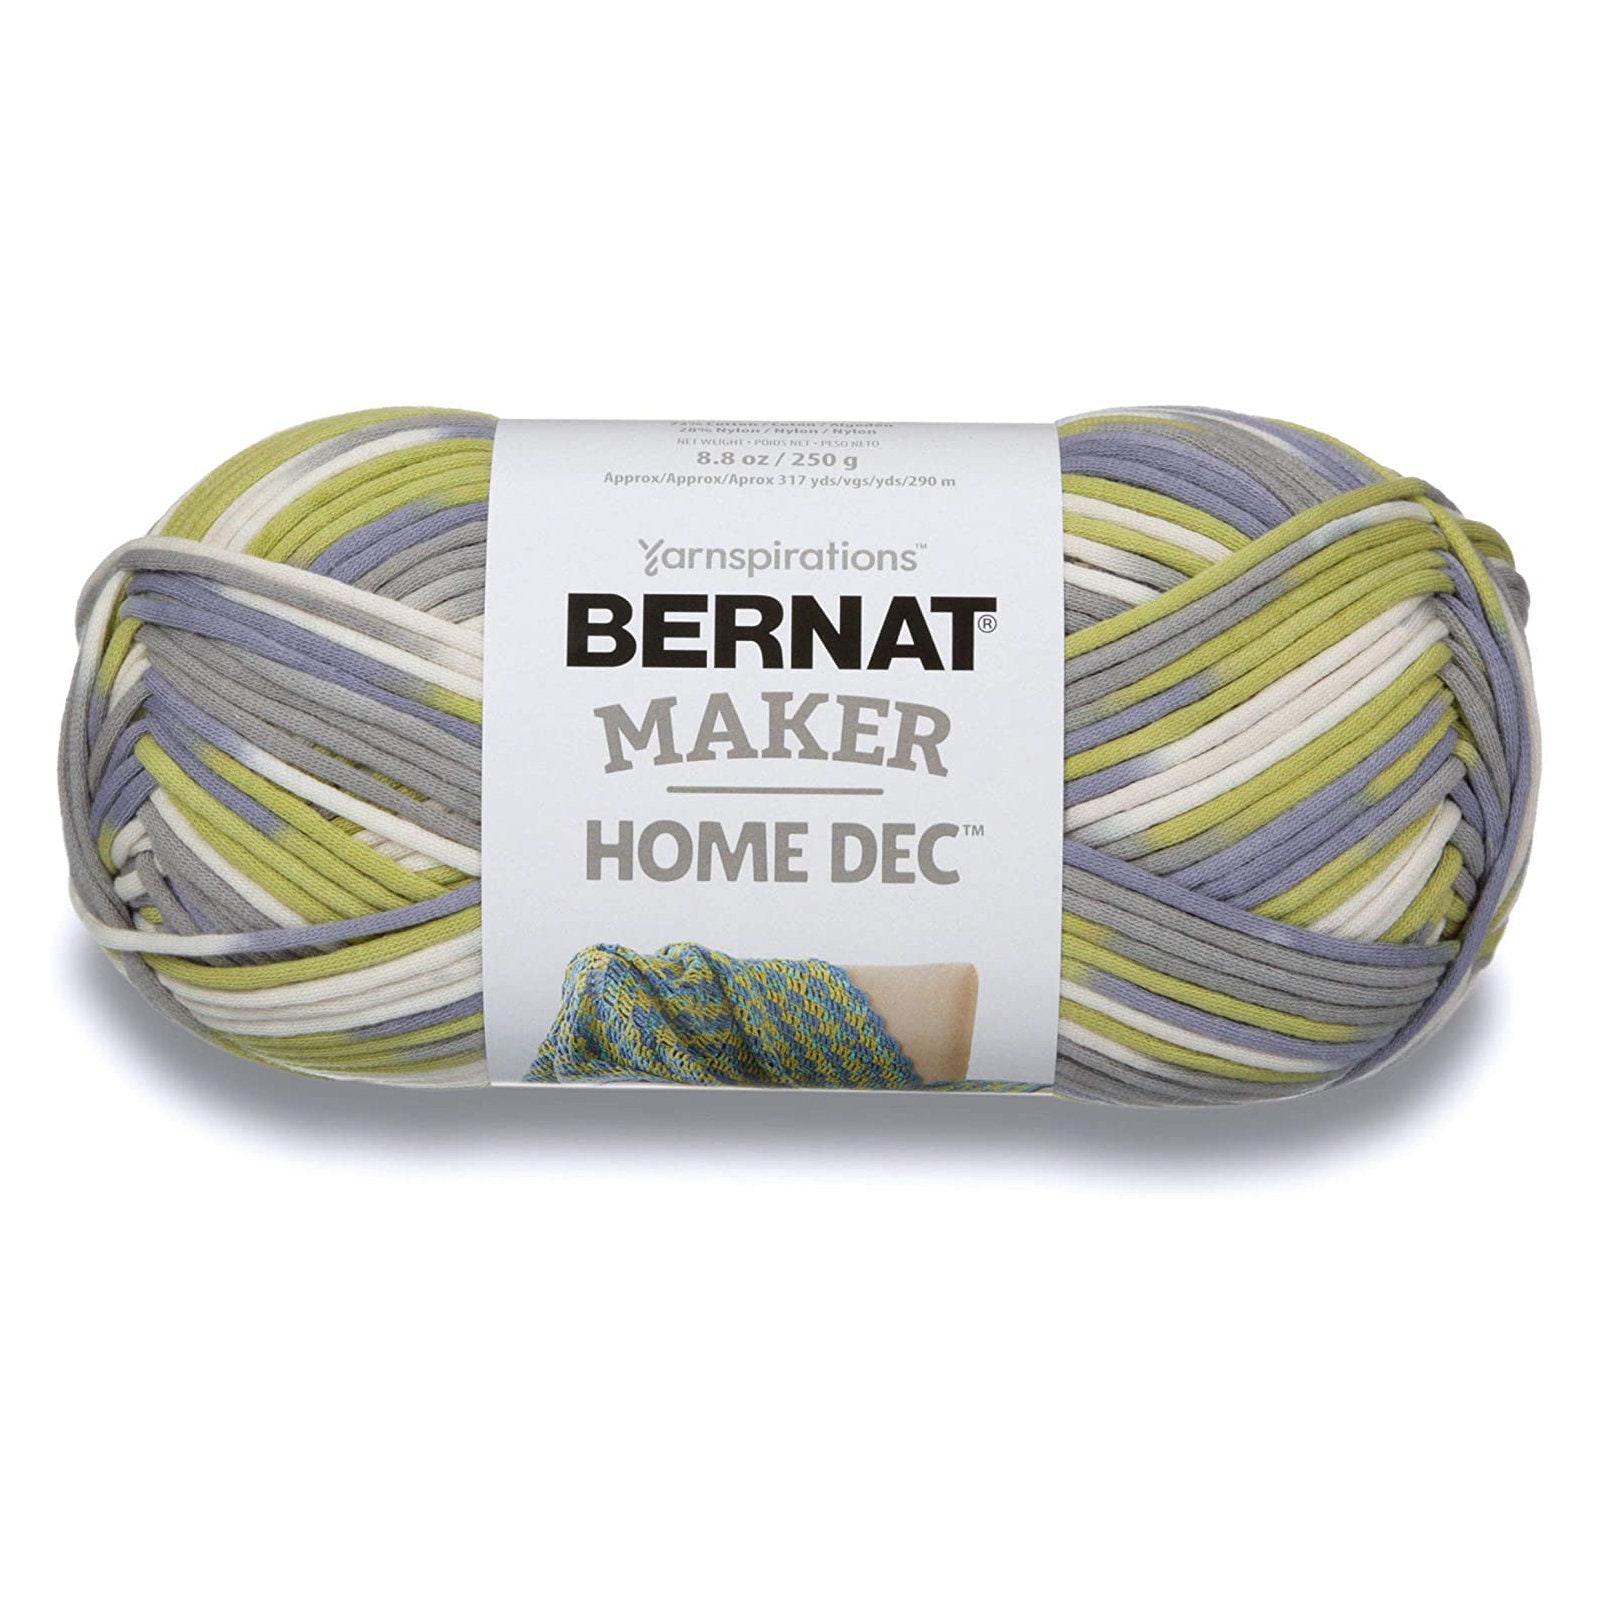 Bernat Maker Home Dec Yarn - Lilac Fence Variegate